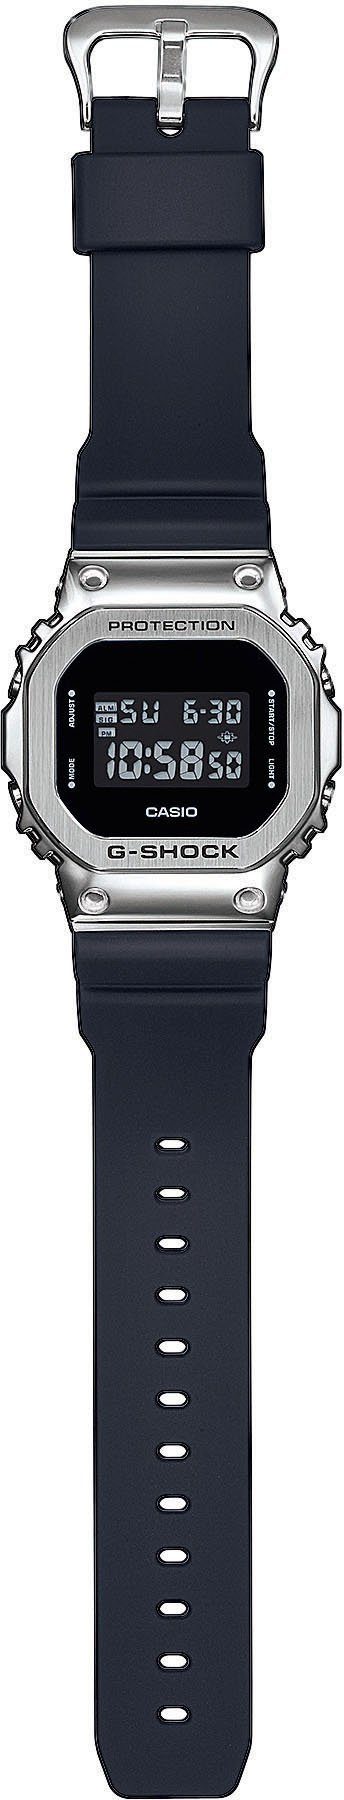 Chronograph G-SHOCK GM-5600-1ER CASIO